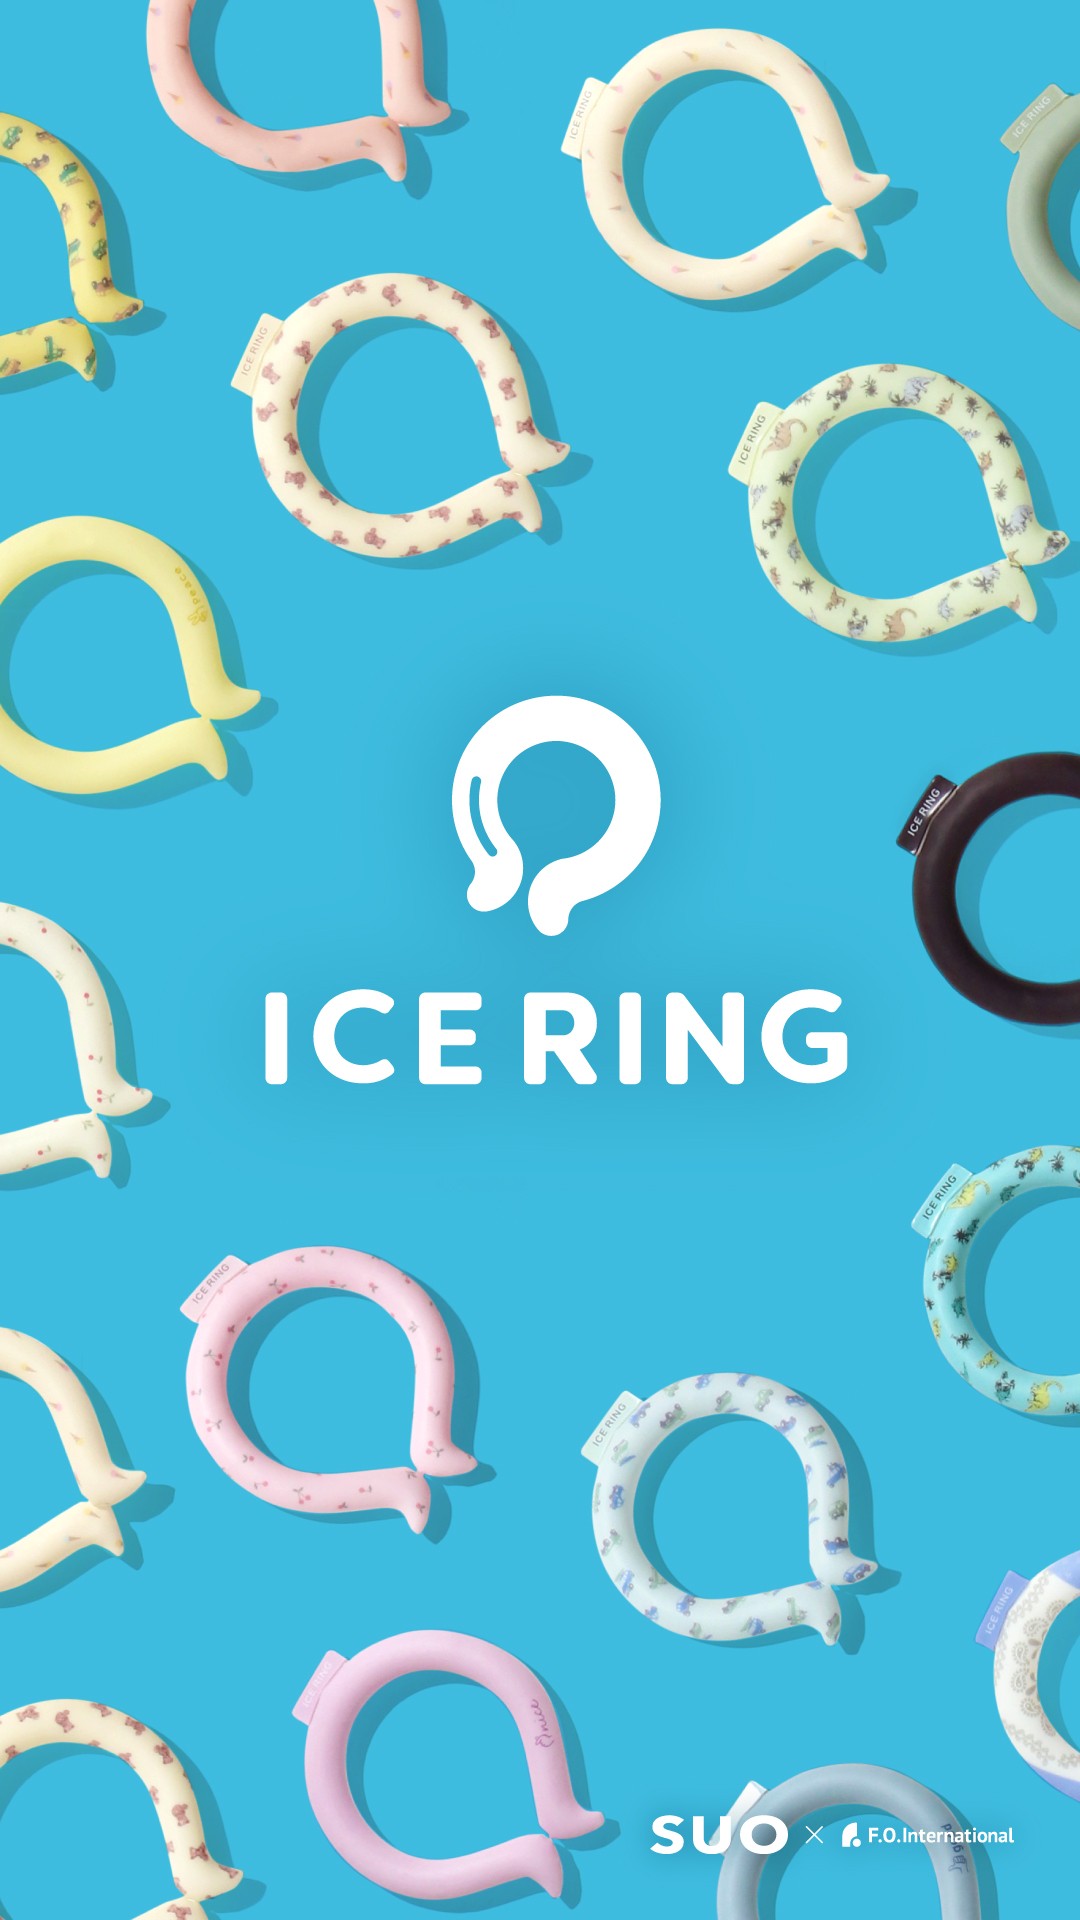 ICE RING